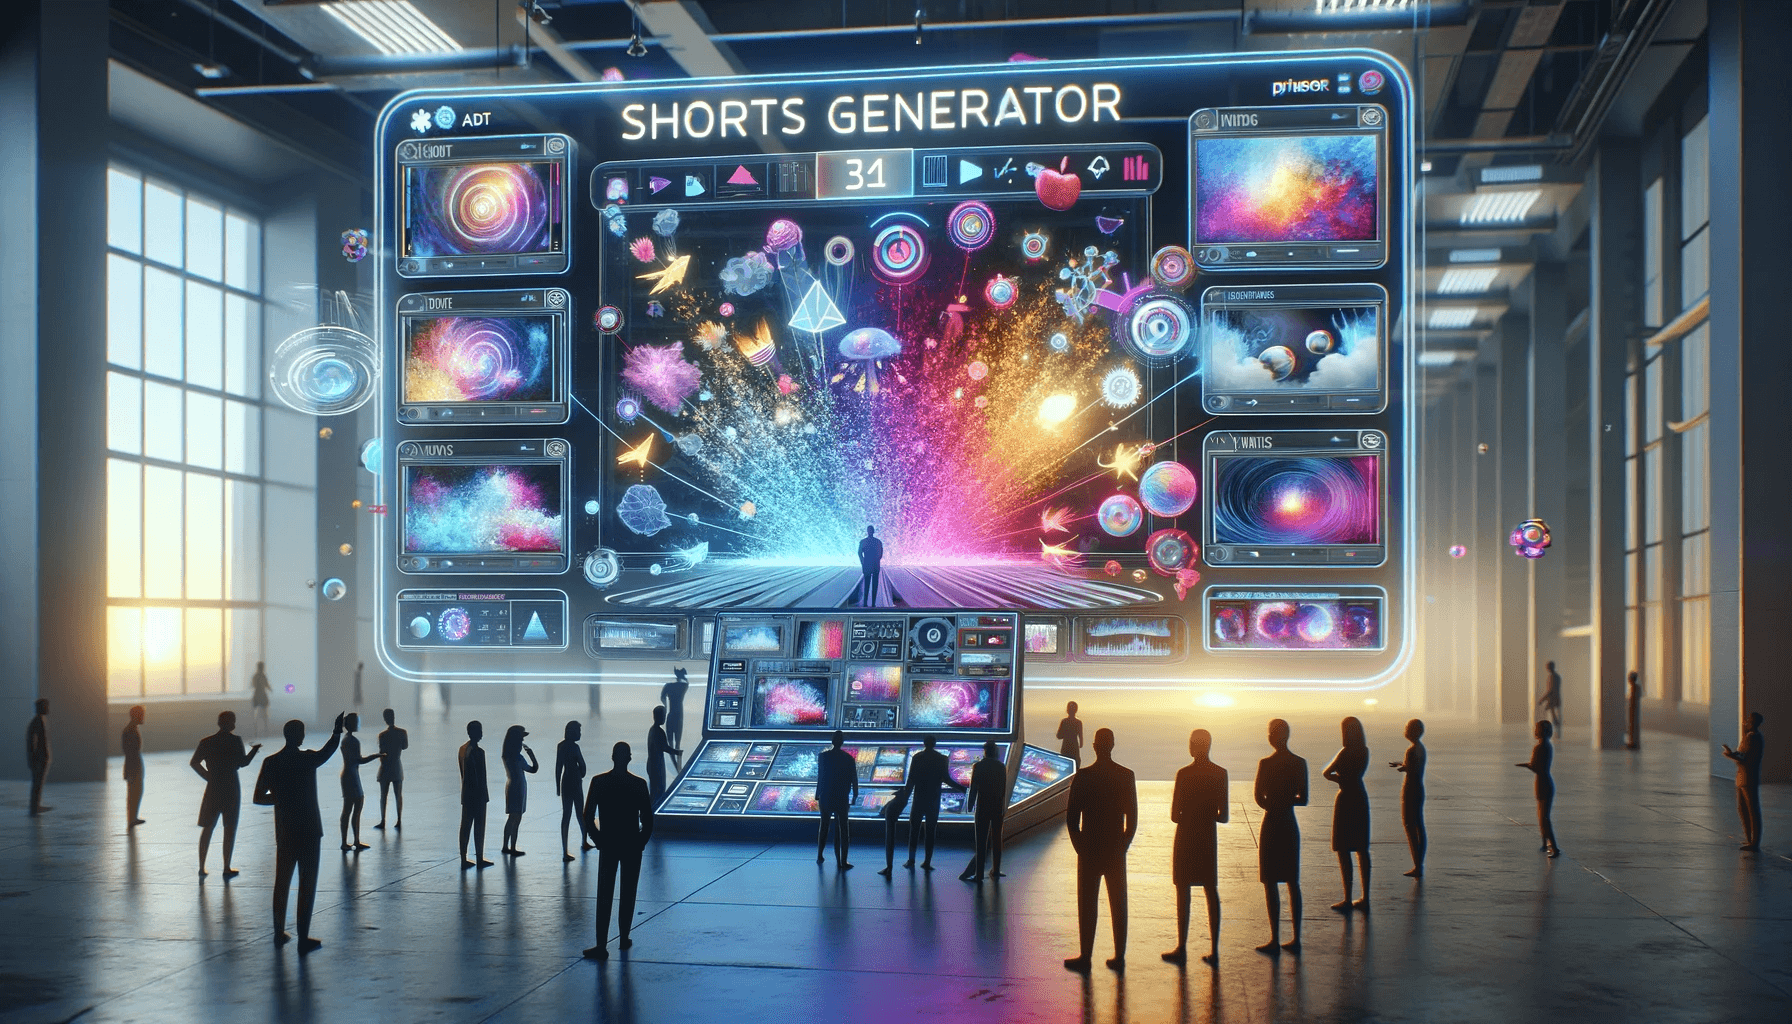 A visual representation of Shorts Generator's capabilities